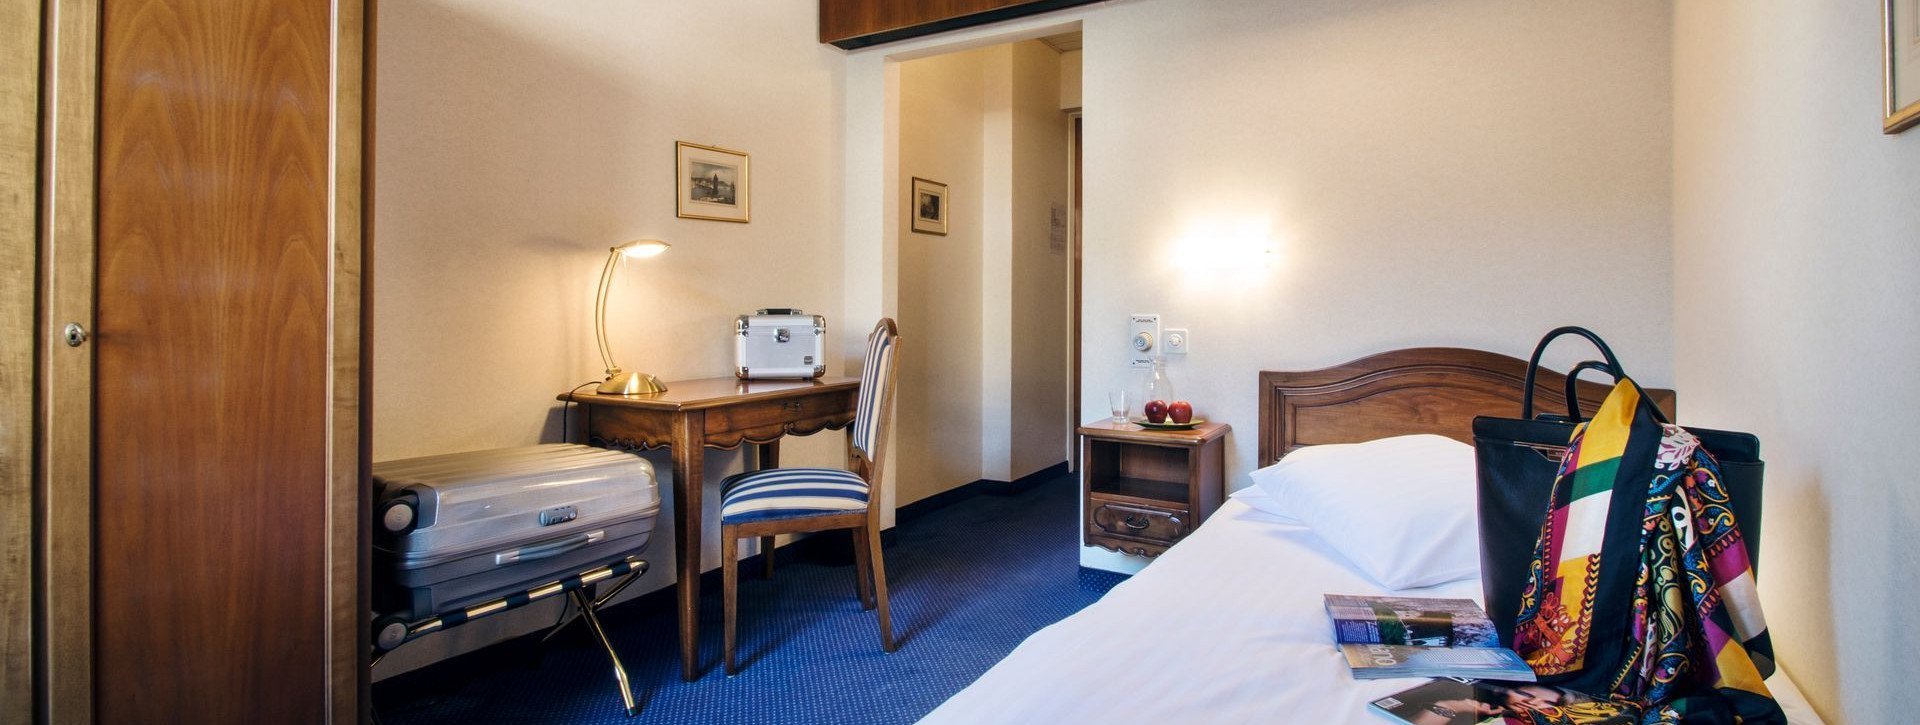 Single Classic room in the International au Lac Historic Lakeside Hotel